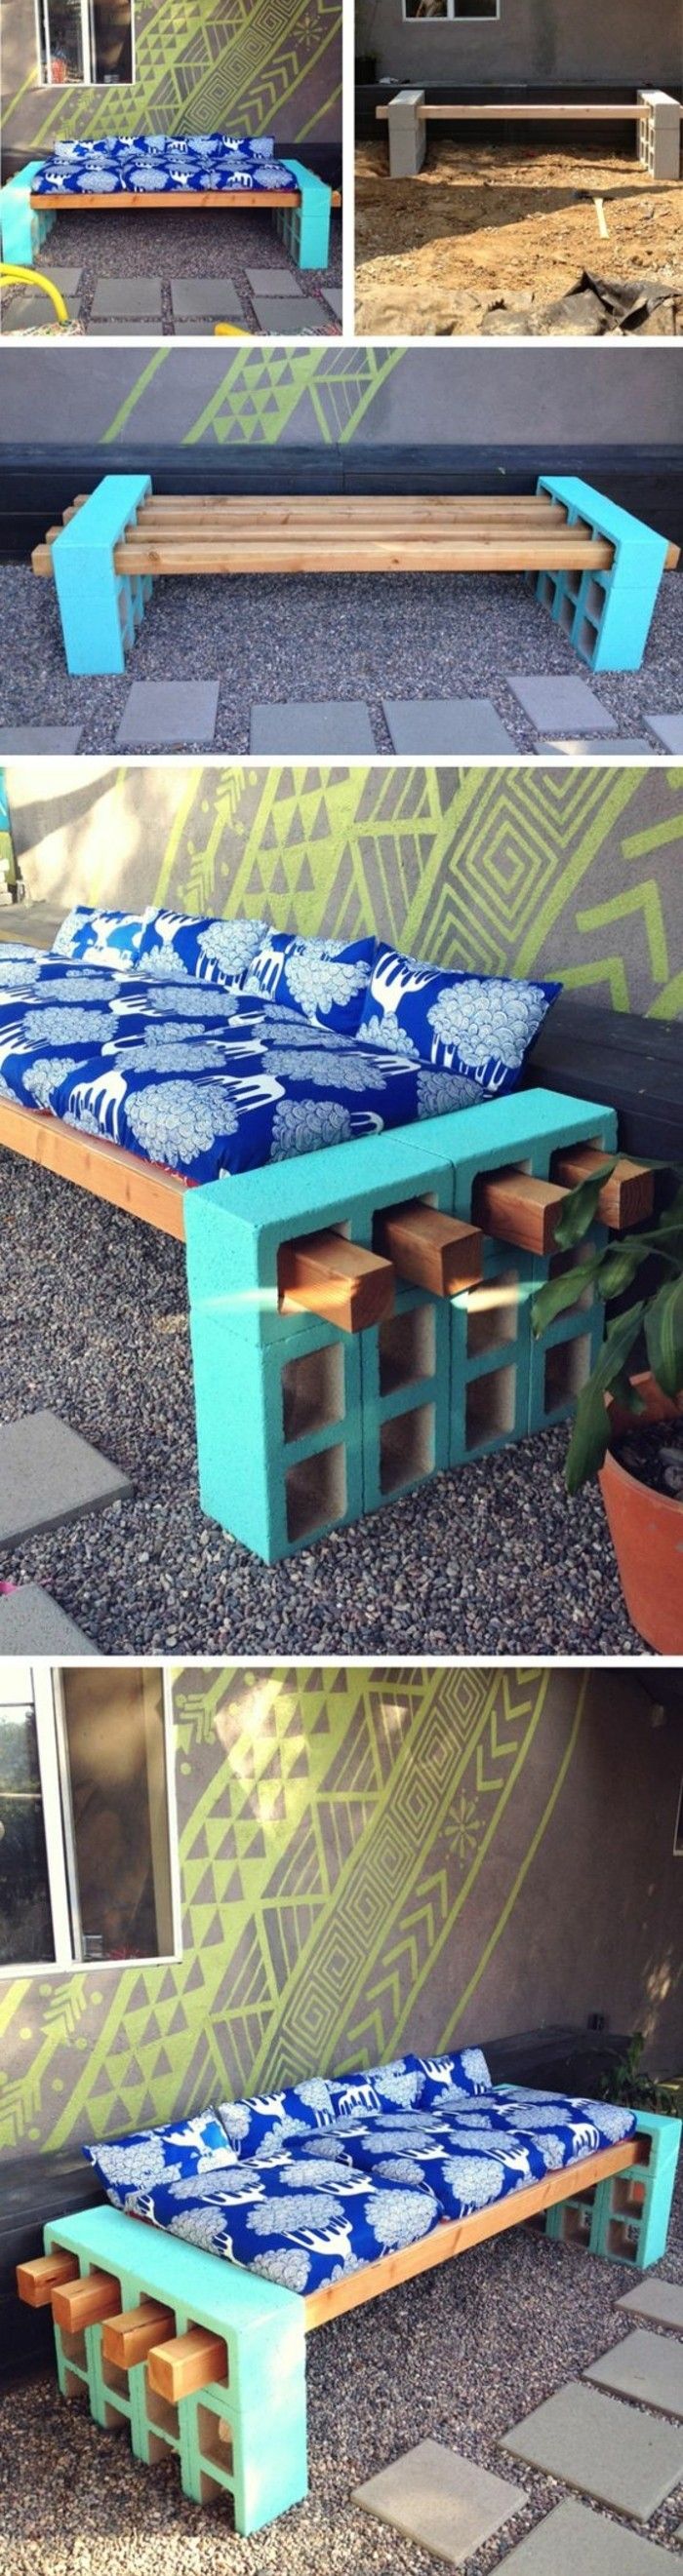 DIY-Moebel-wohnideen-seoeber podejmowania blue-sofa-z drewna